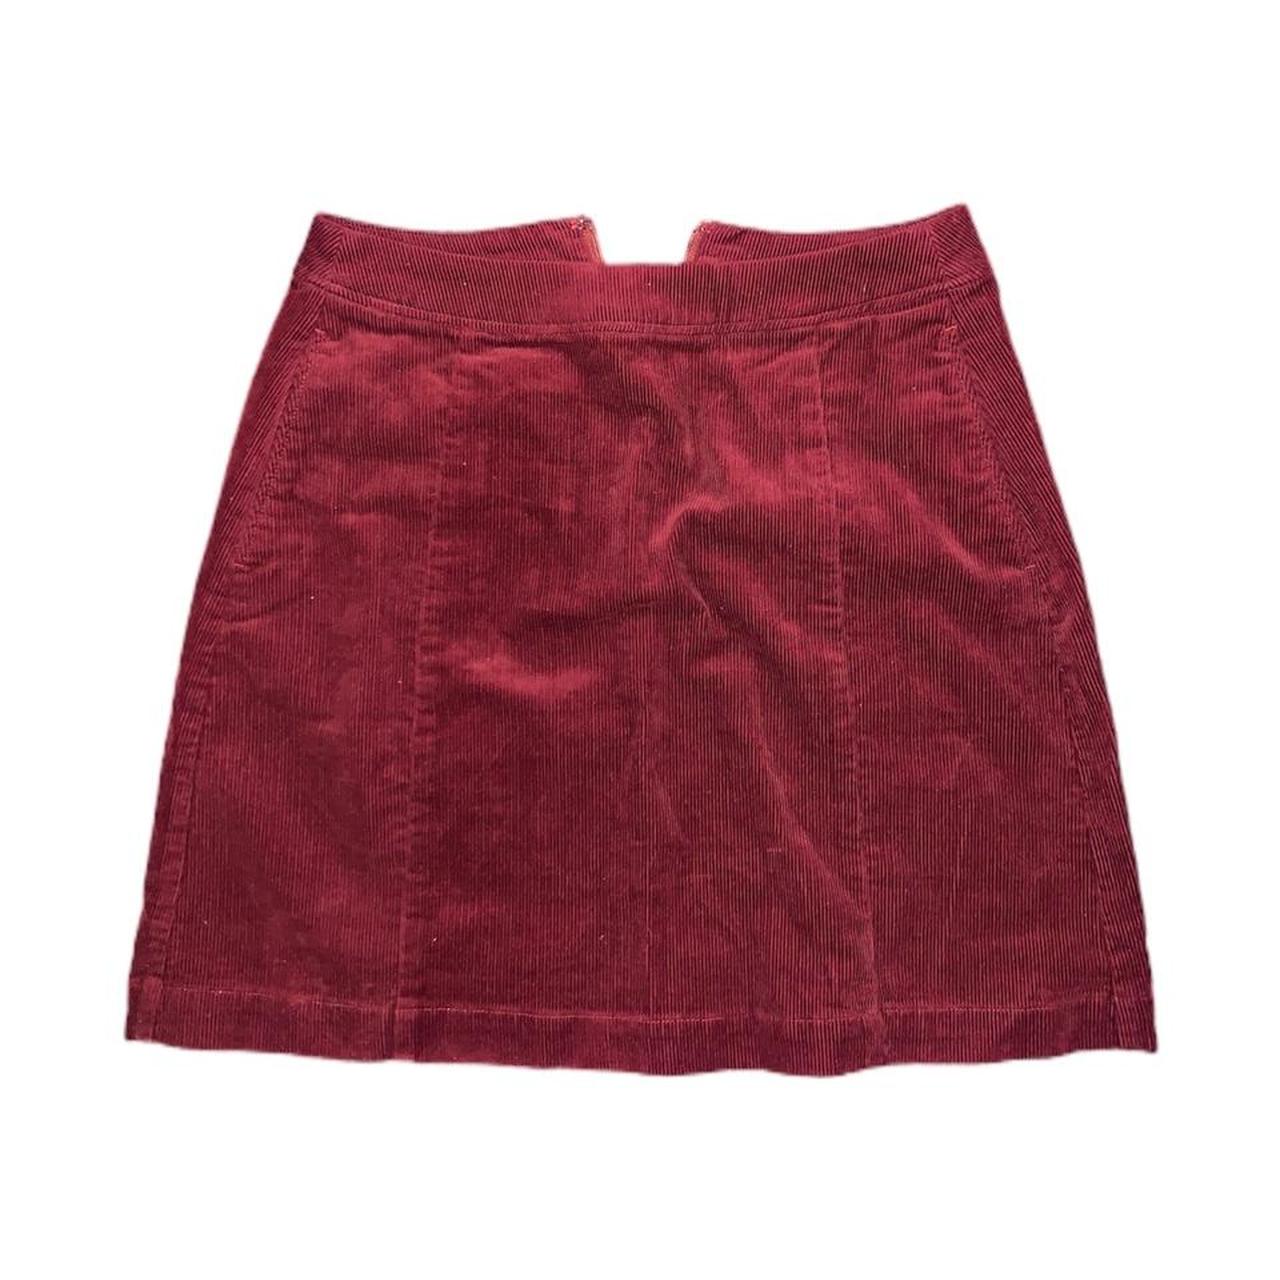 UNIQLO Women's Burgundy Skirt | Depop